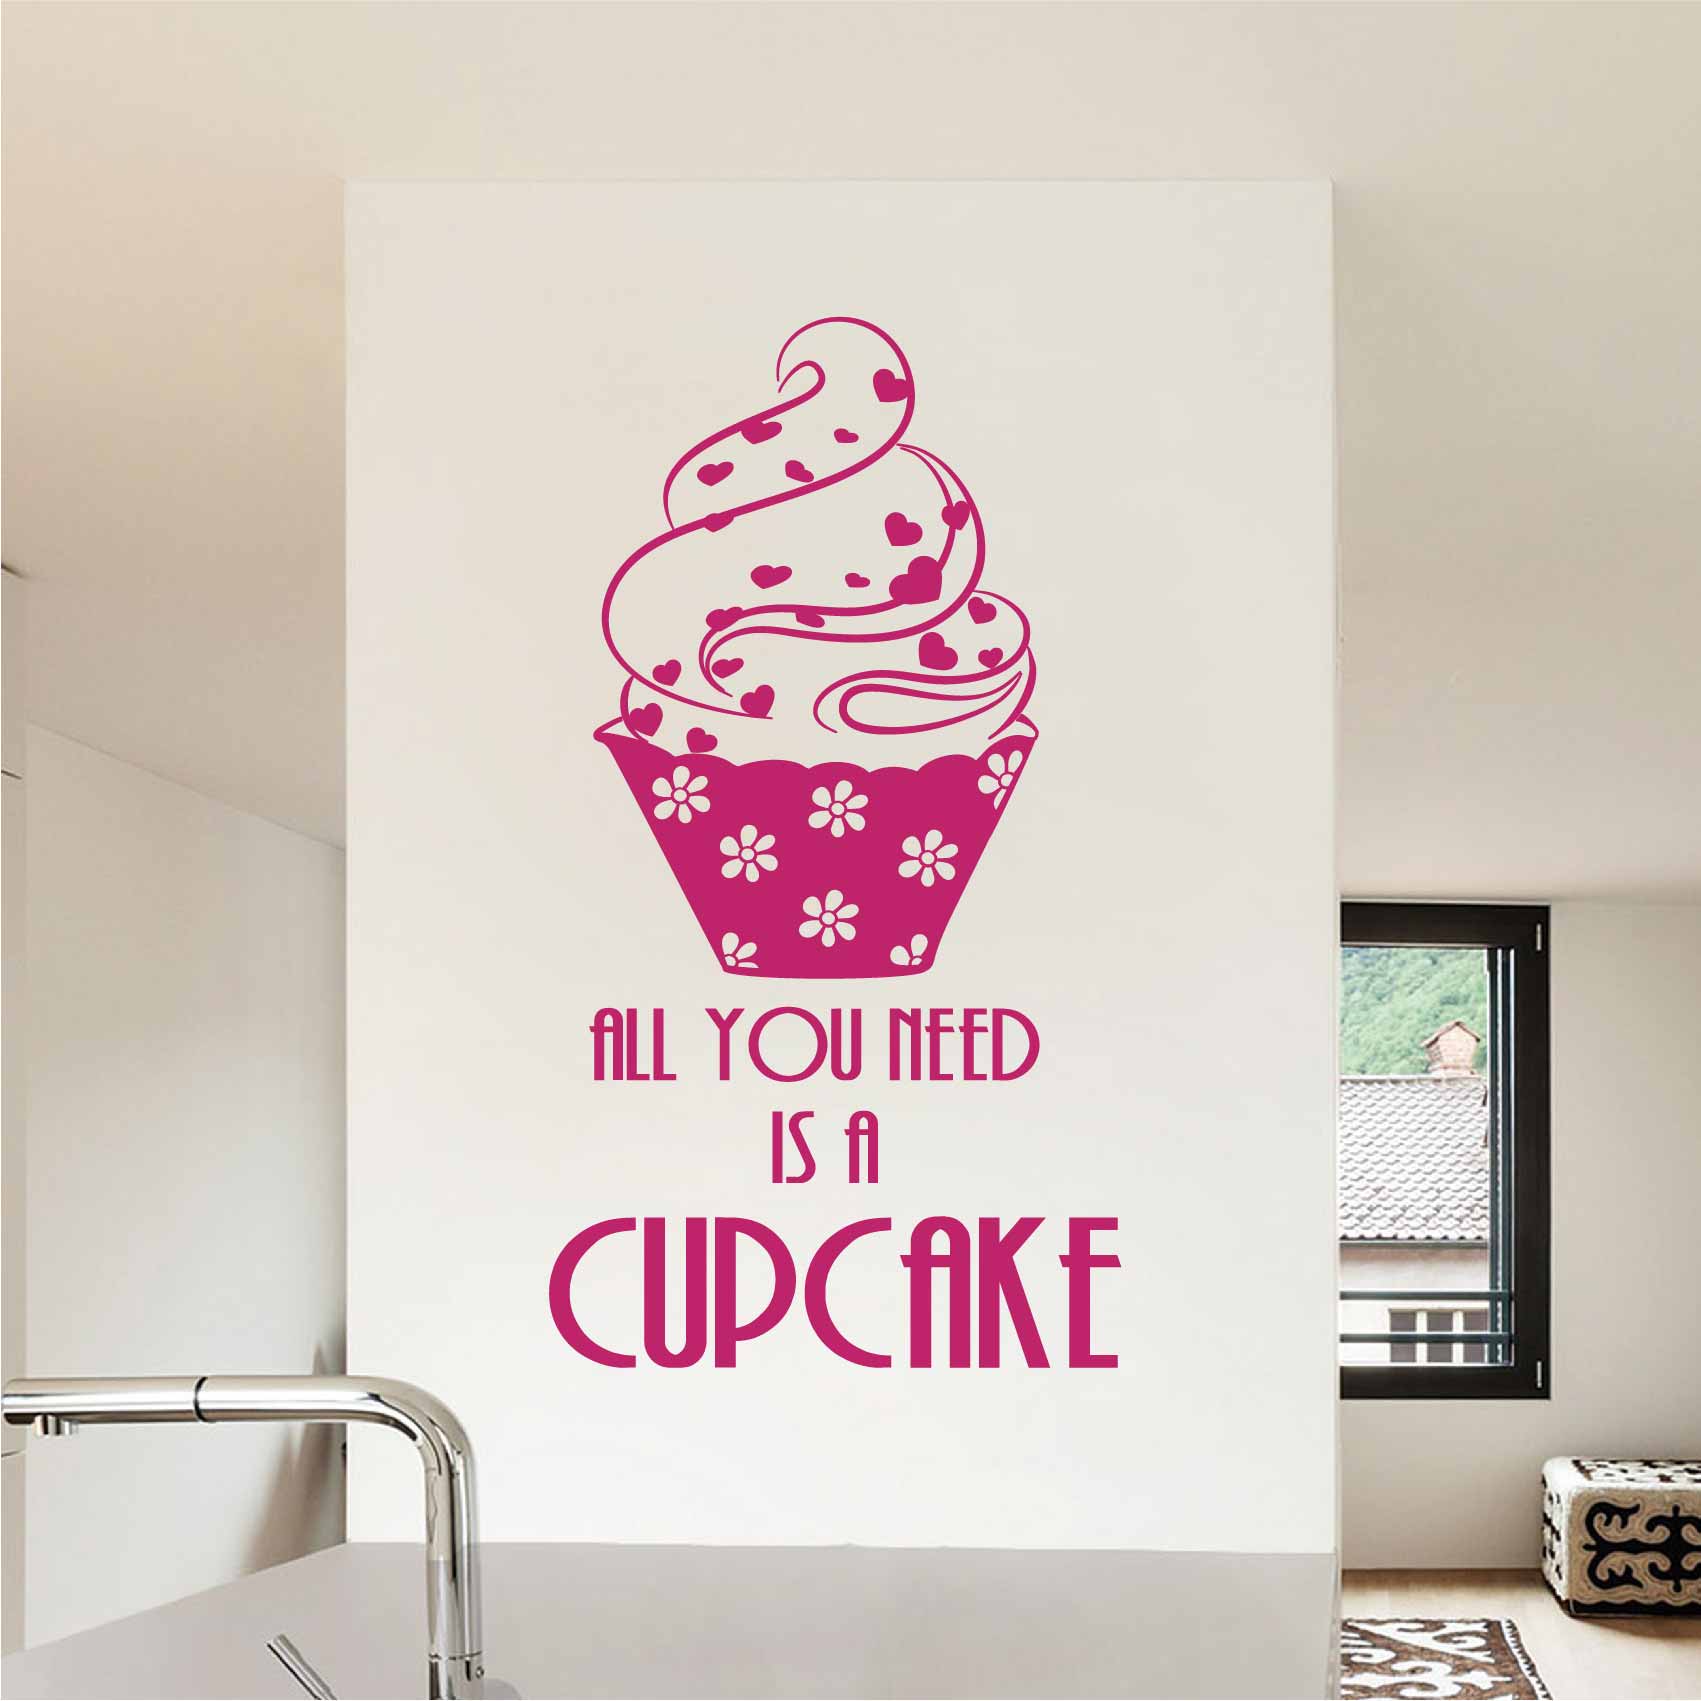 stickers-all-you-need-is-a-cupcake-ref16cupcake-autocollant-muraux-cuisine-salle-a-manger-salon-sticker-mural-deco-gateau-cupcakes-gateaux